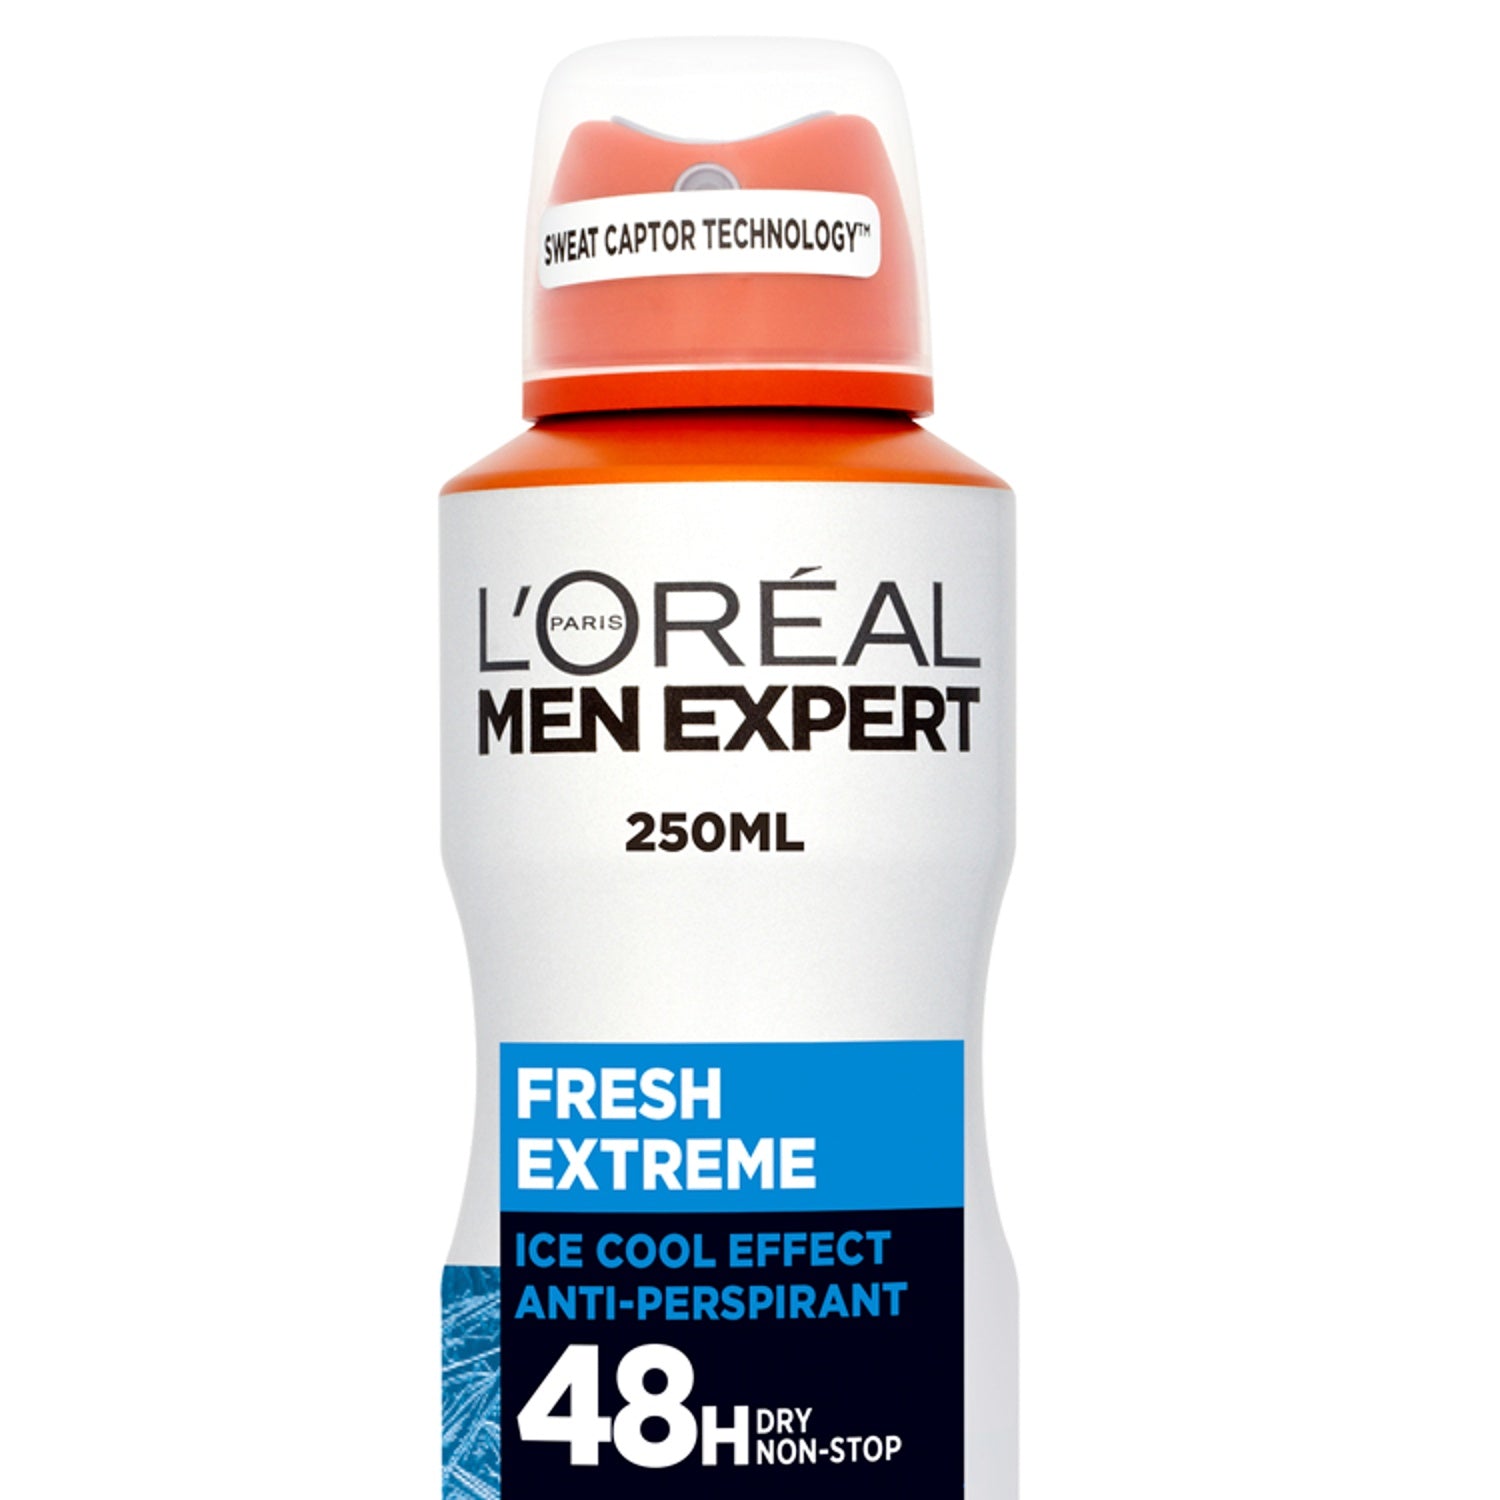 Loreal Men Expert Fresh Extreme Anti-Perspirant Deodorant 250ml